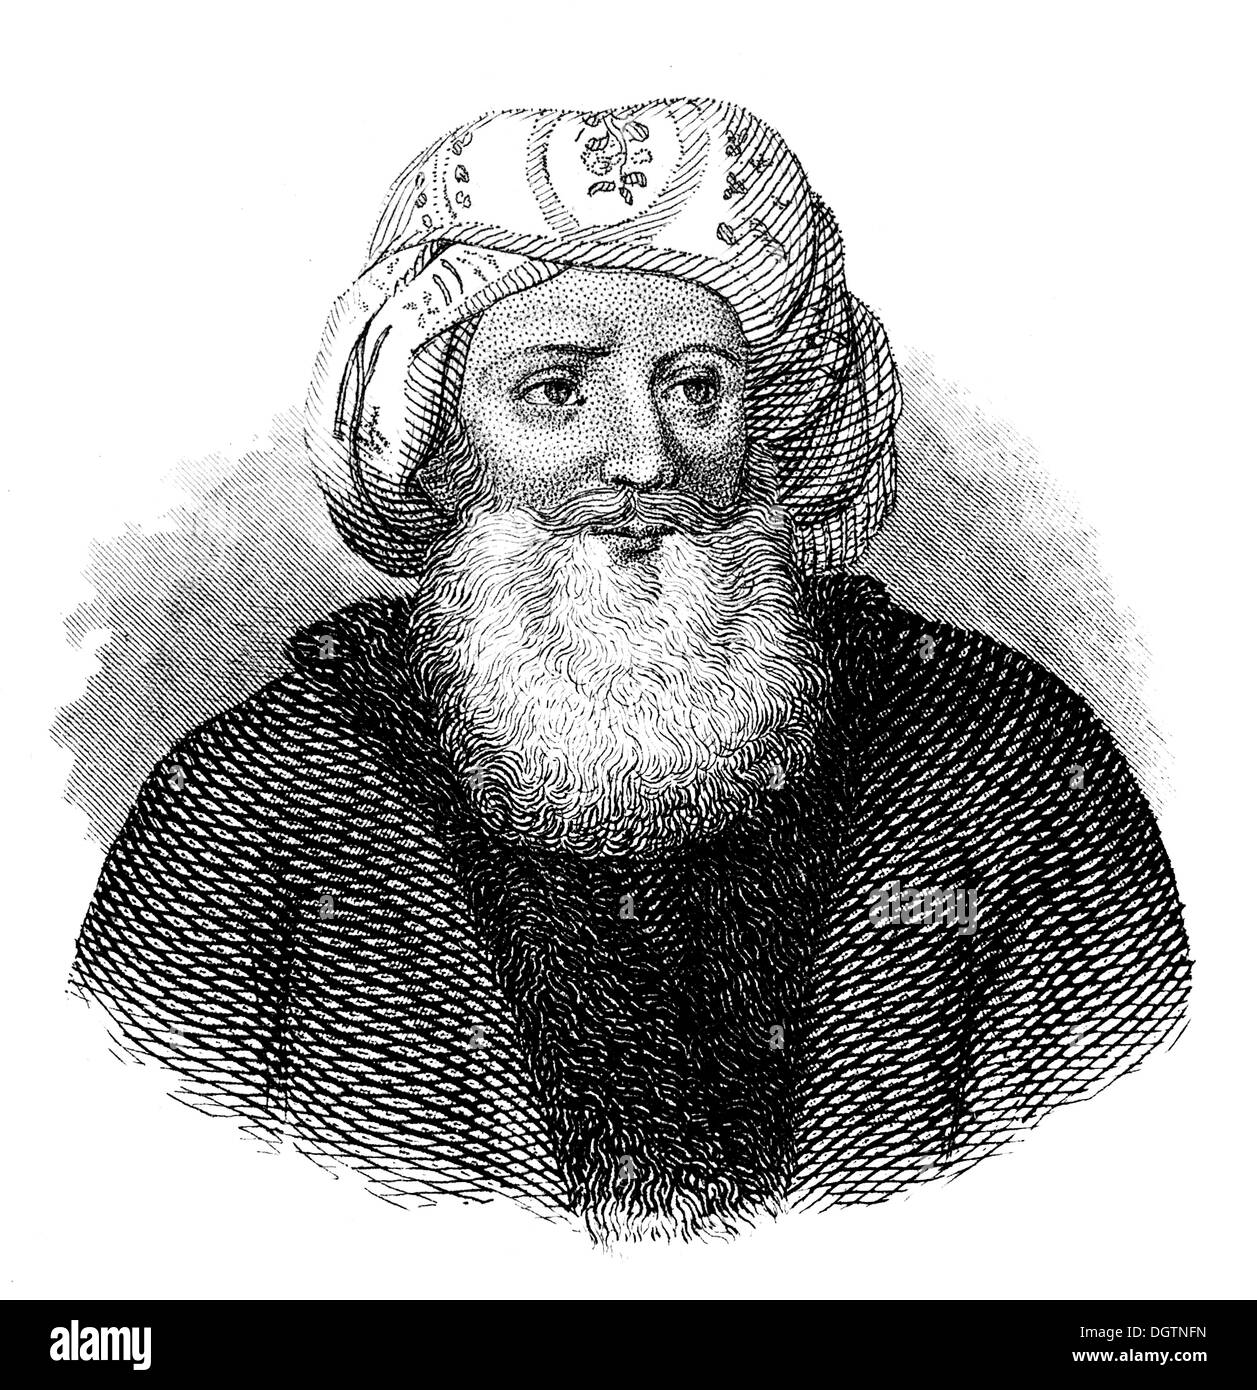 Muhammad Ali Pasha al-Mas'ud ibn Agha, Muḥammad 'Alī Bāshā; 1769 - 1849, un comandante albanese, Khedive di Egitto e Sudan Foto Stock